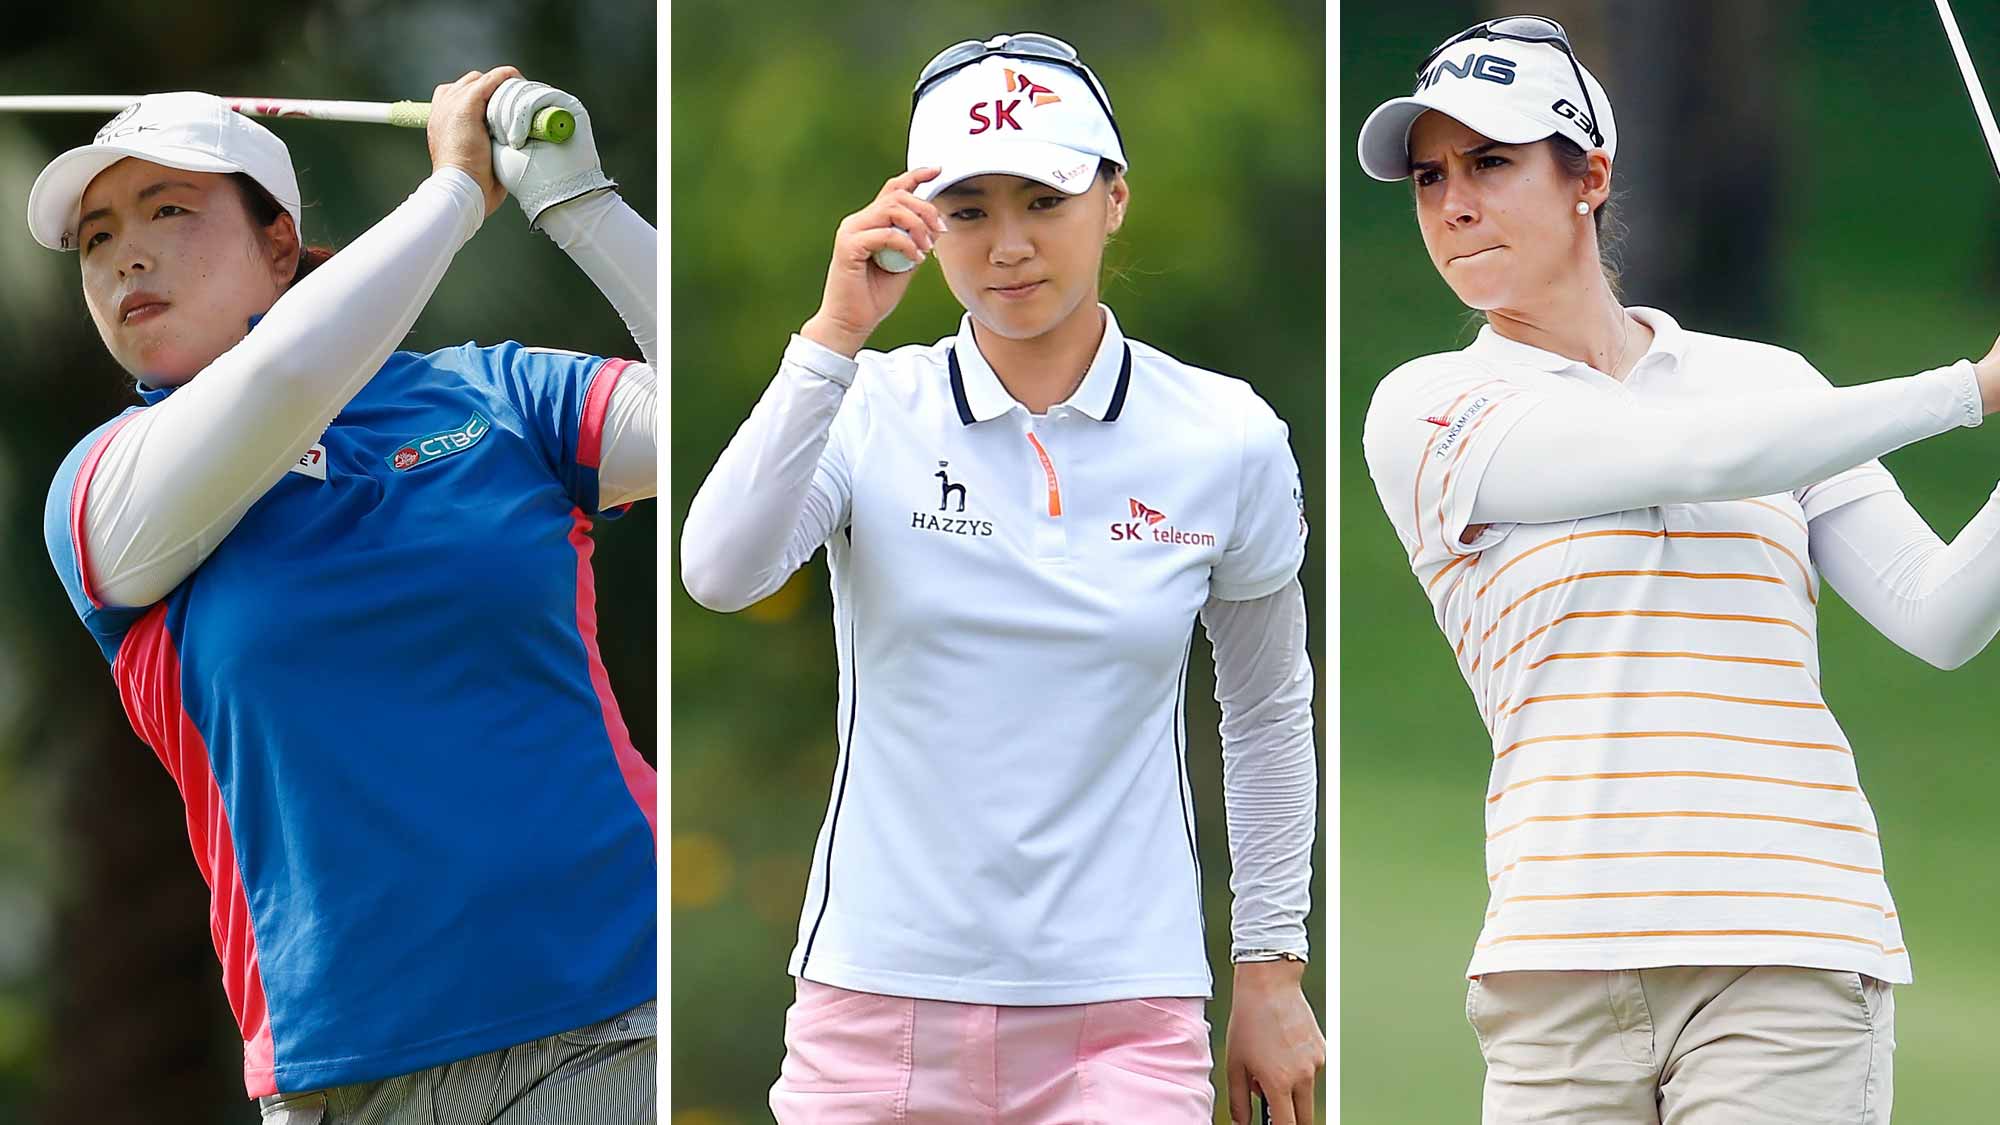 UL Sponsors Professional LPGA TOUR Golfers, Shanshan Feng, Na Yeon Choi, and Azahara Munoz in Company’s First Ever Athlete Sponsorships